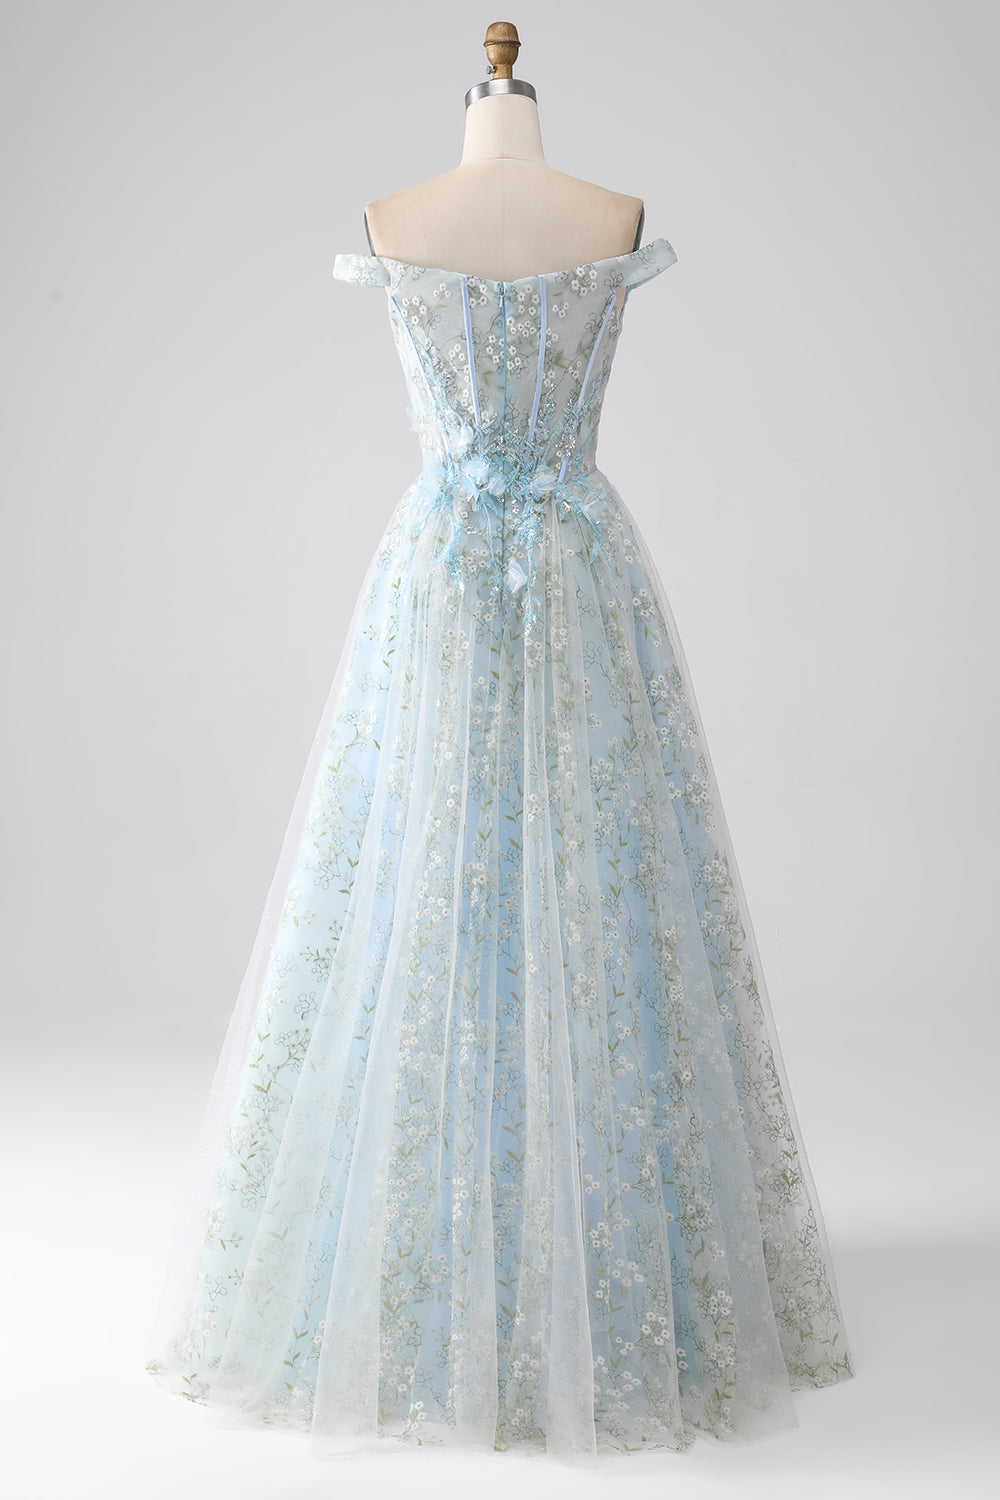 Light Blue A-Line Off the Shoulder Long Corset Prom Dress